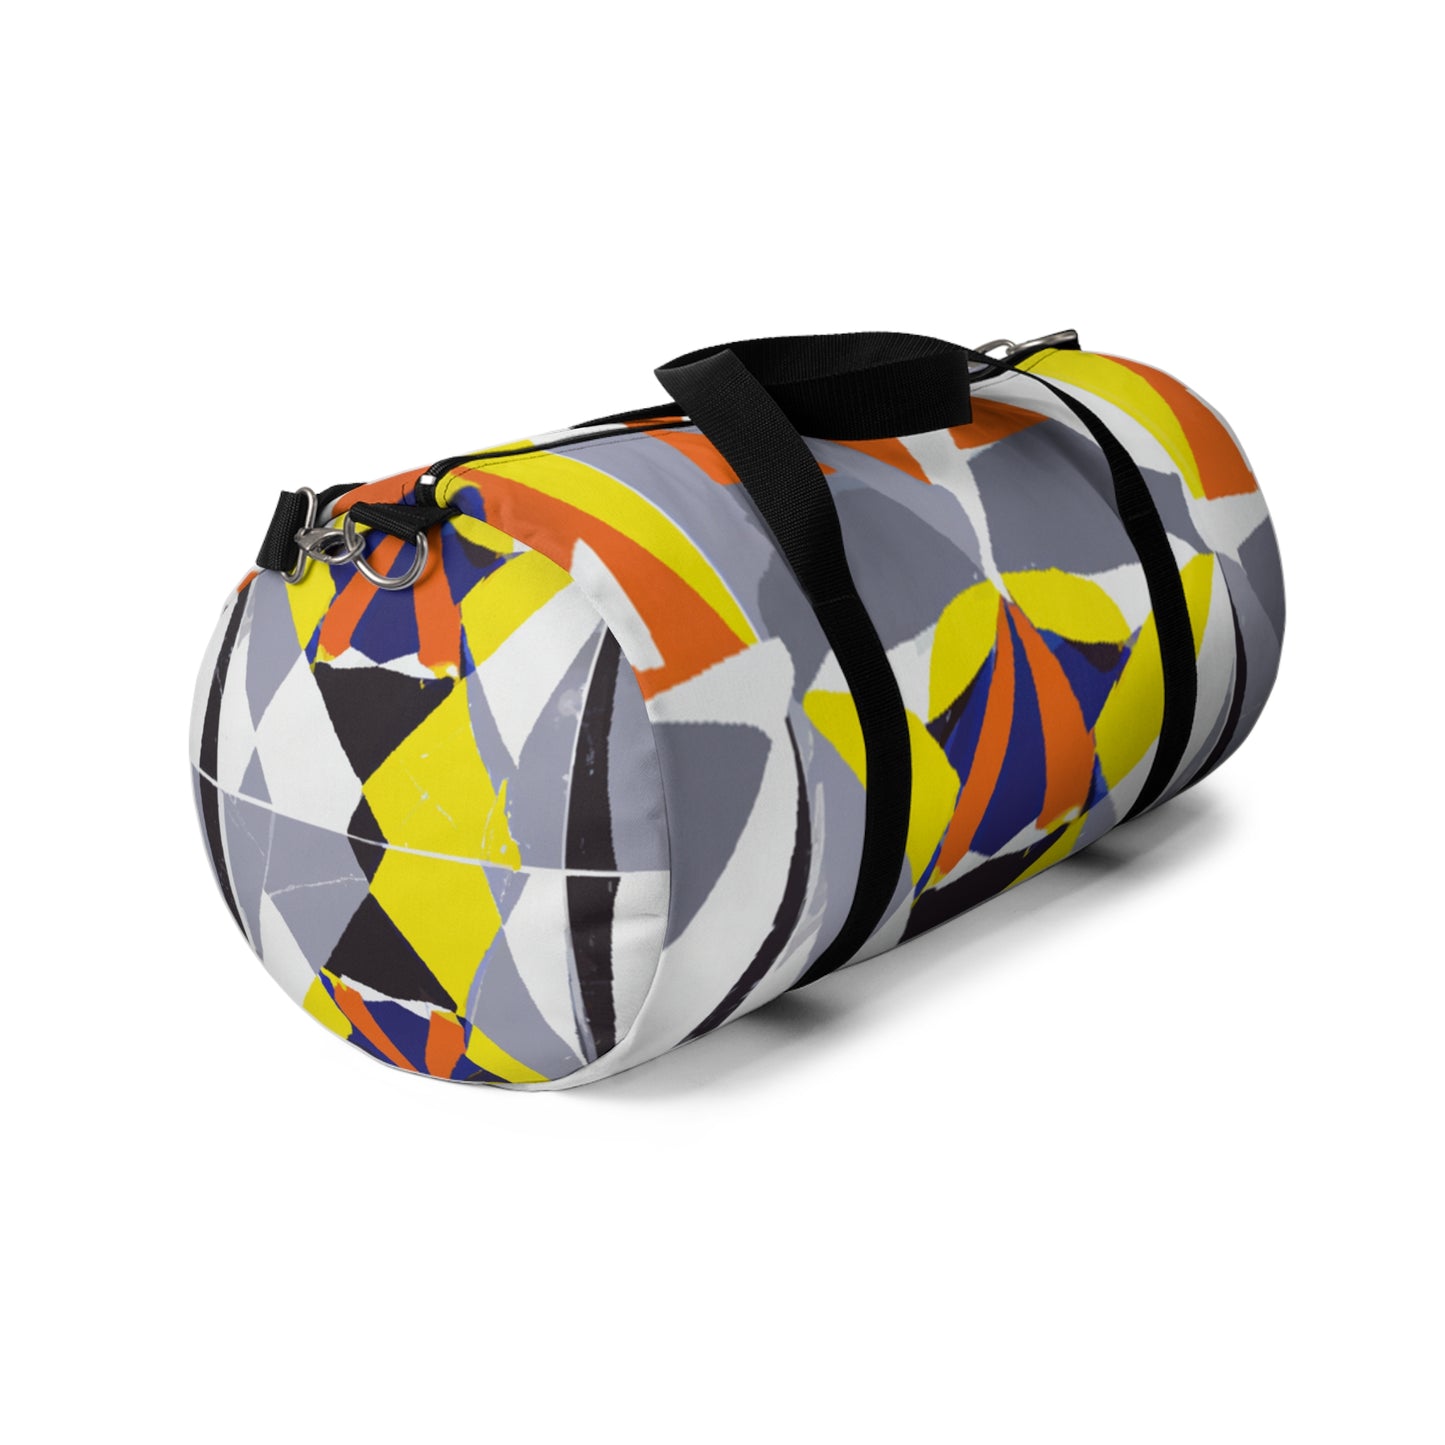 Jane Mathson - Geometric Pattern Duffel Travel Gym Luggage Bag